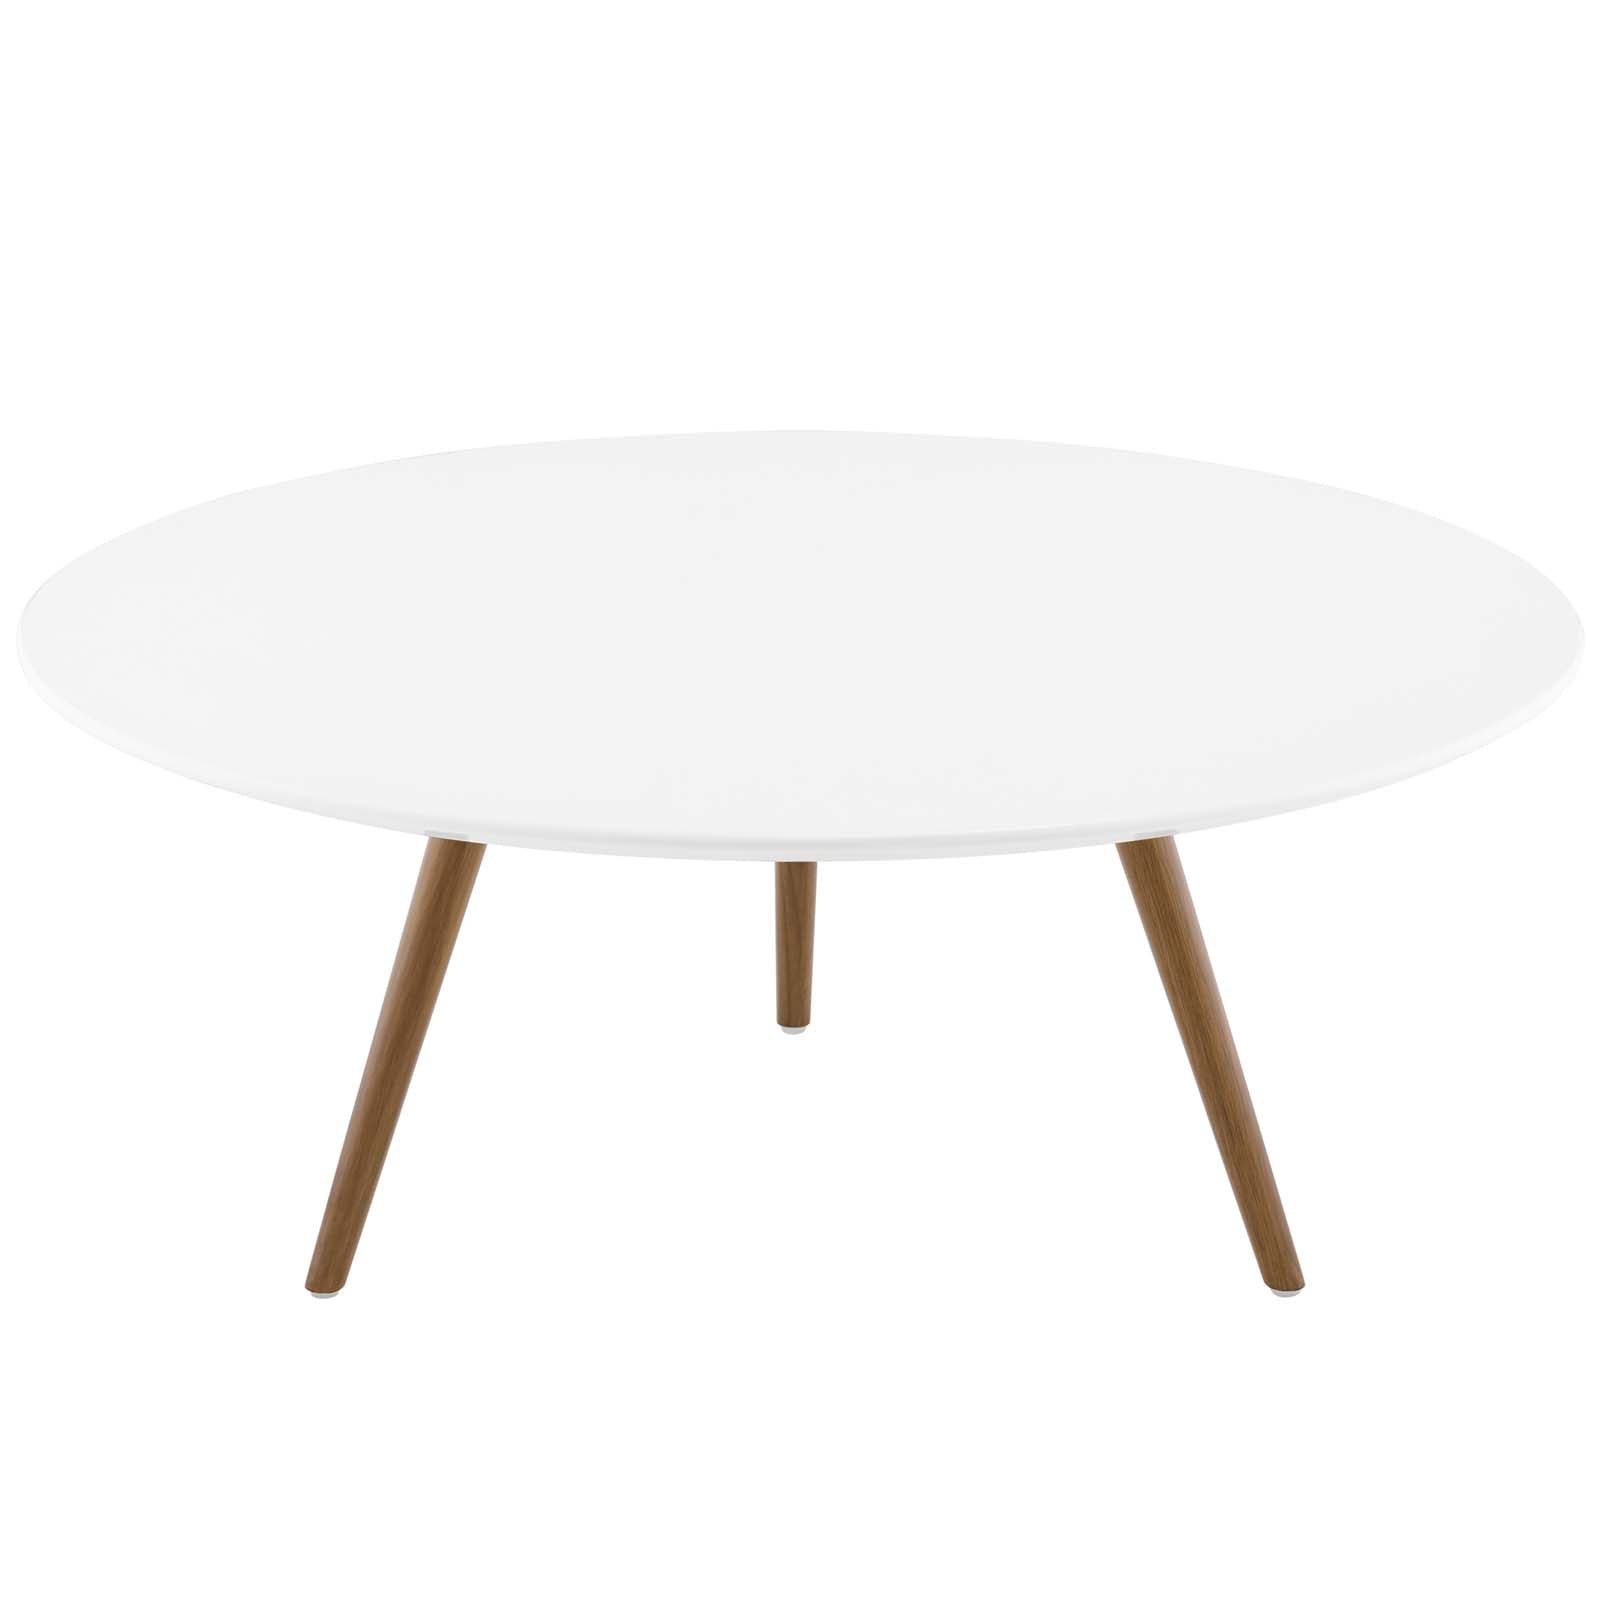 Lippa 36" Round Wood Top Coffee Table with Tripod Base - East Shore Modern Home Furnishings